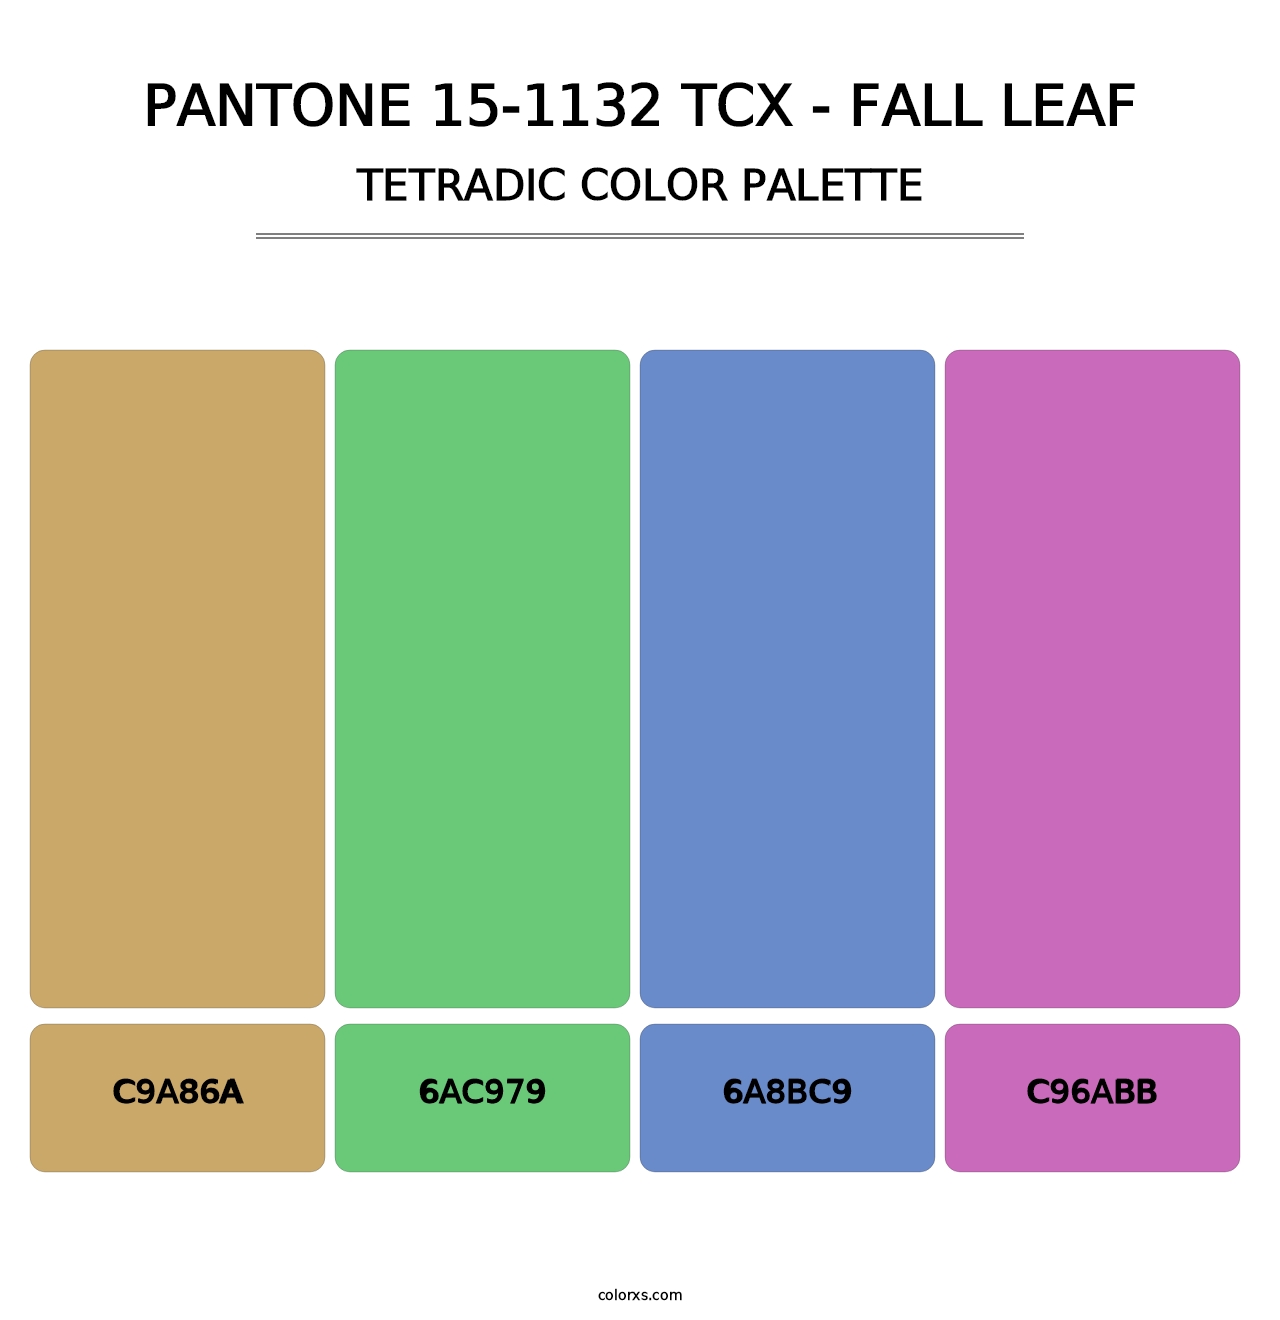 PANTONE 15-1132 TCX - Fall Leaf - Tetradic Color Palette